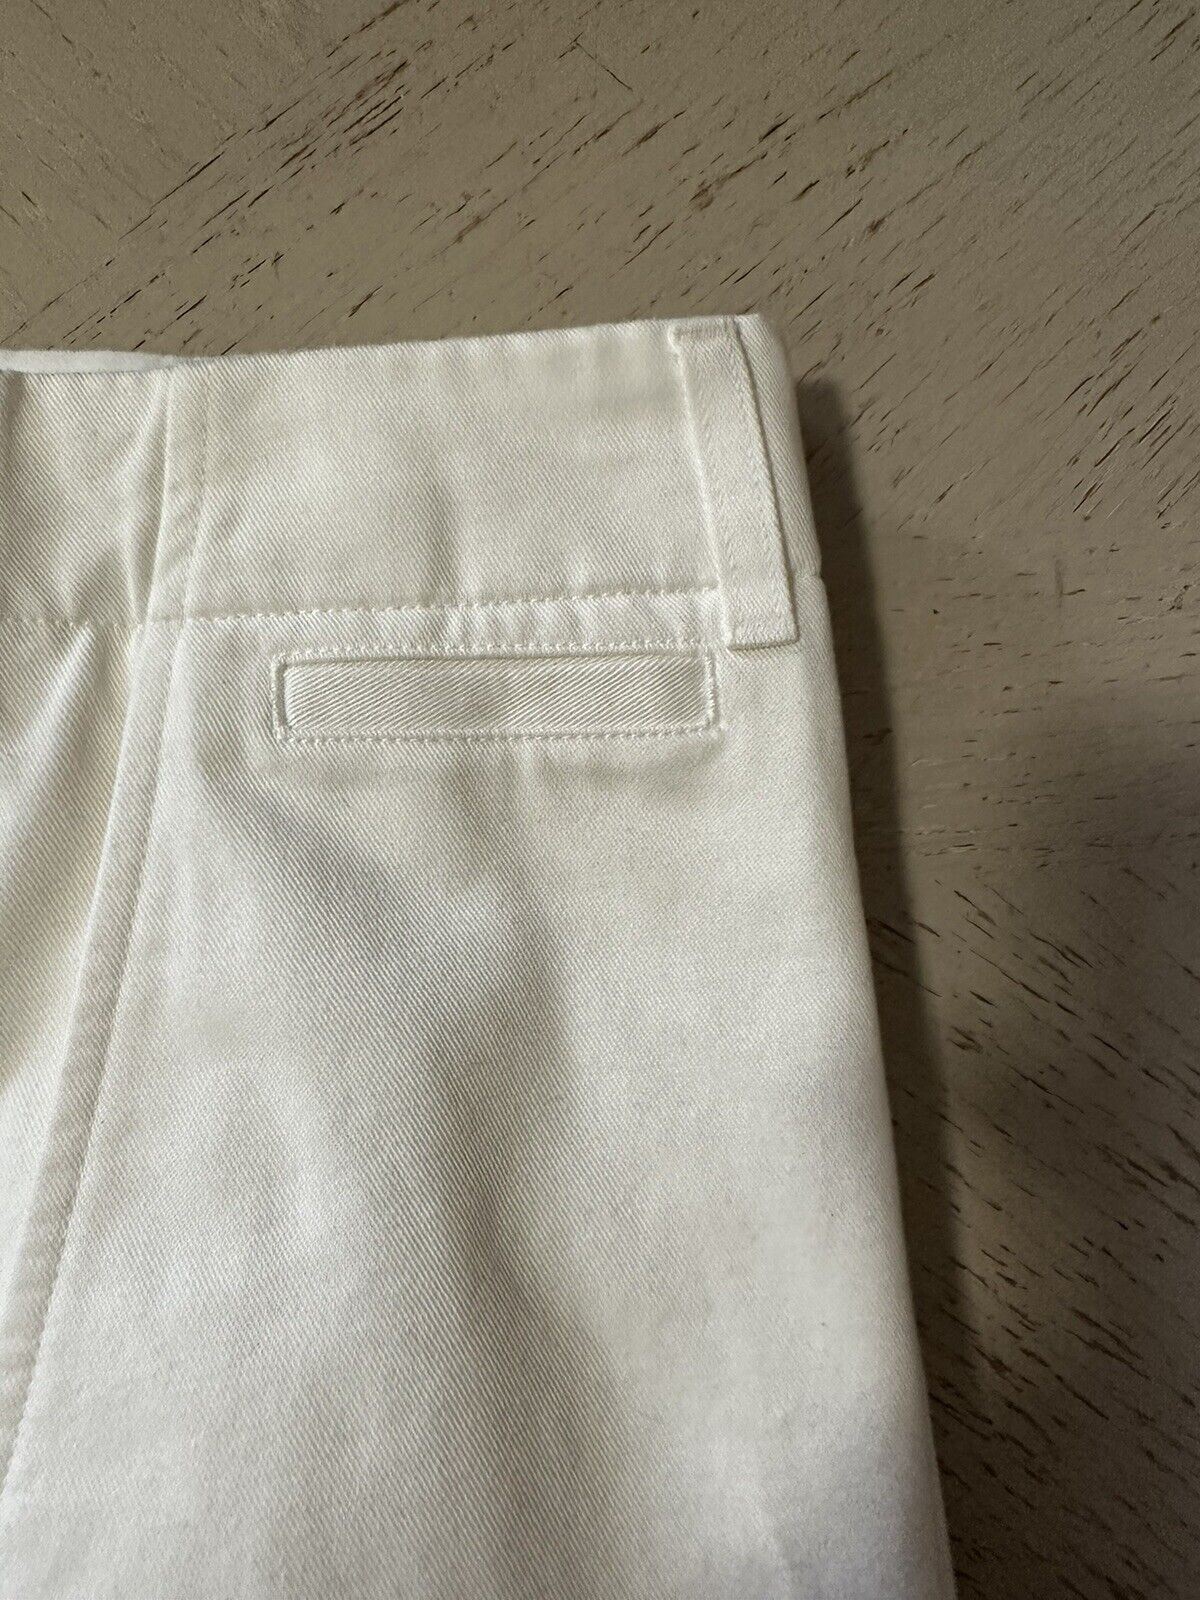 СЗТ $880 Мужские хлопковые короткие брюки Gucci в стиле милитари молочного цвета 30 США/46 ЕС Италия